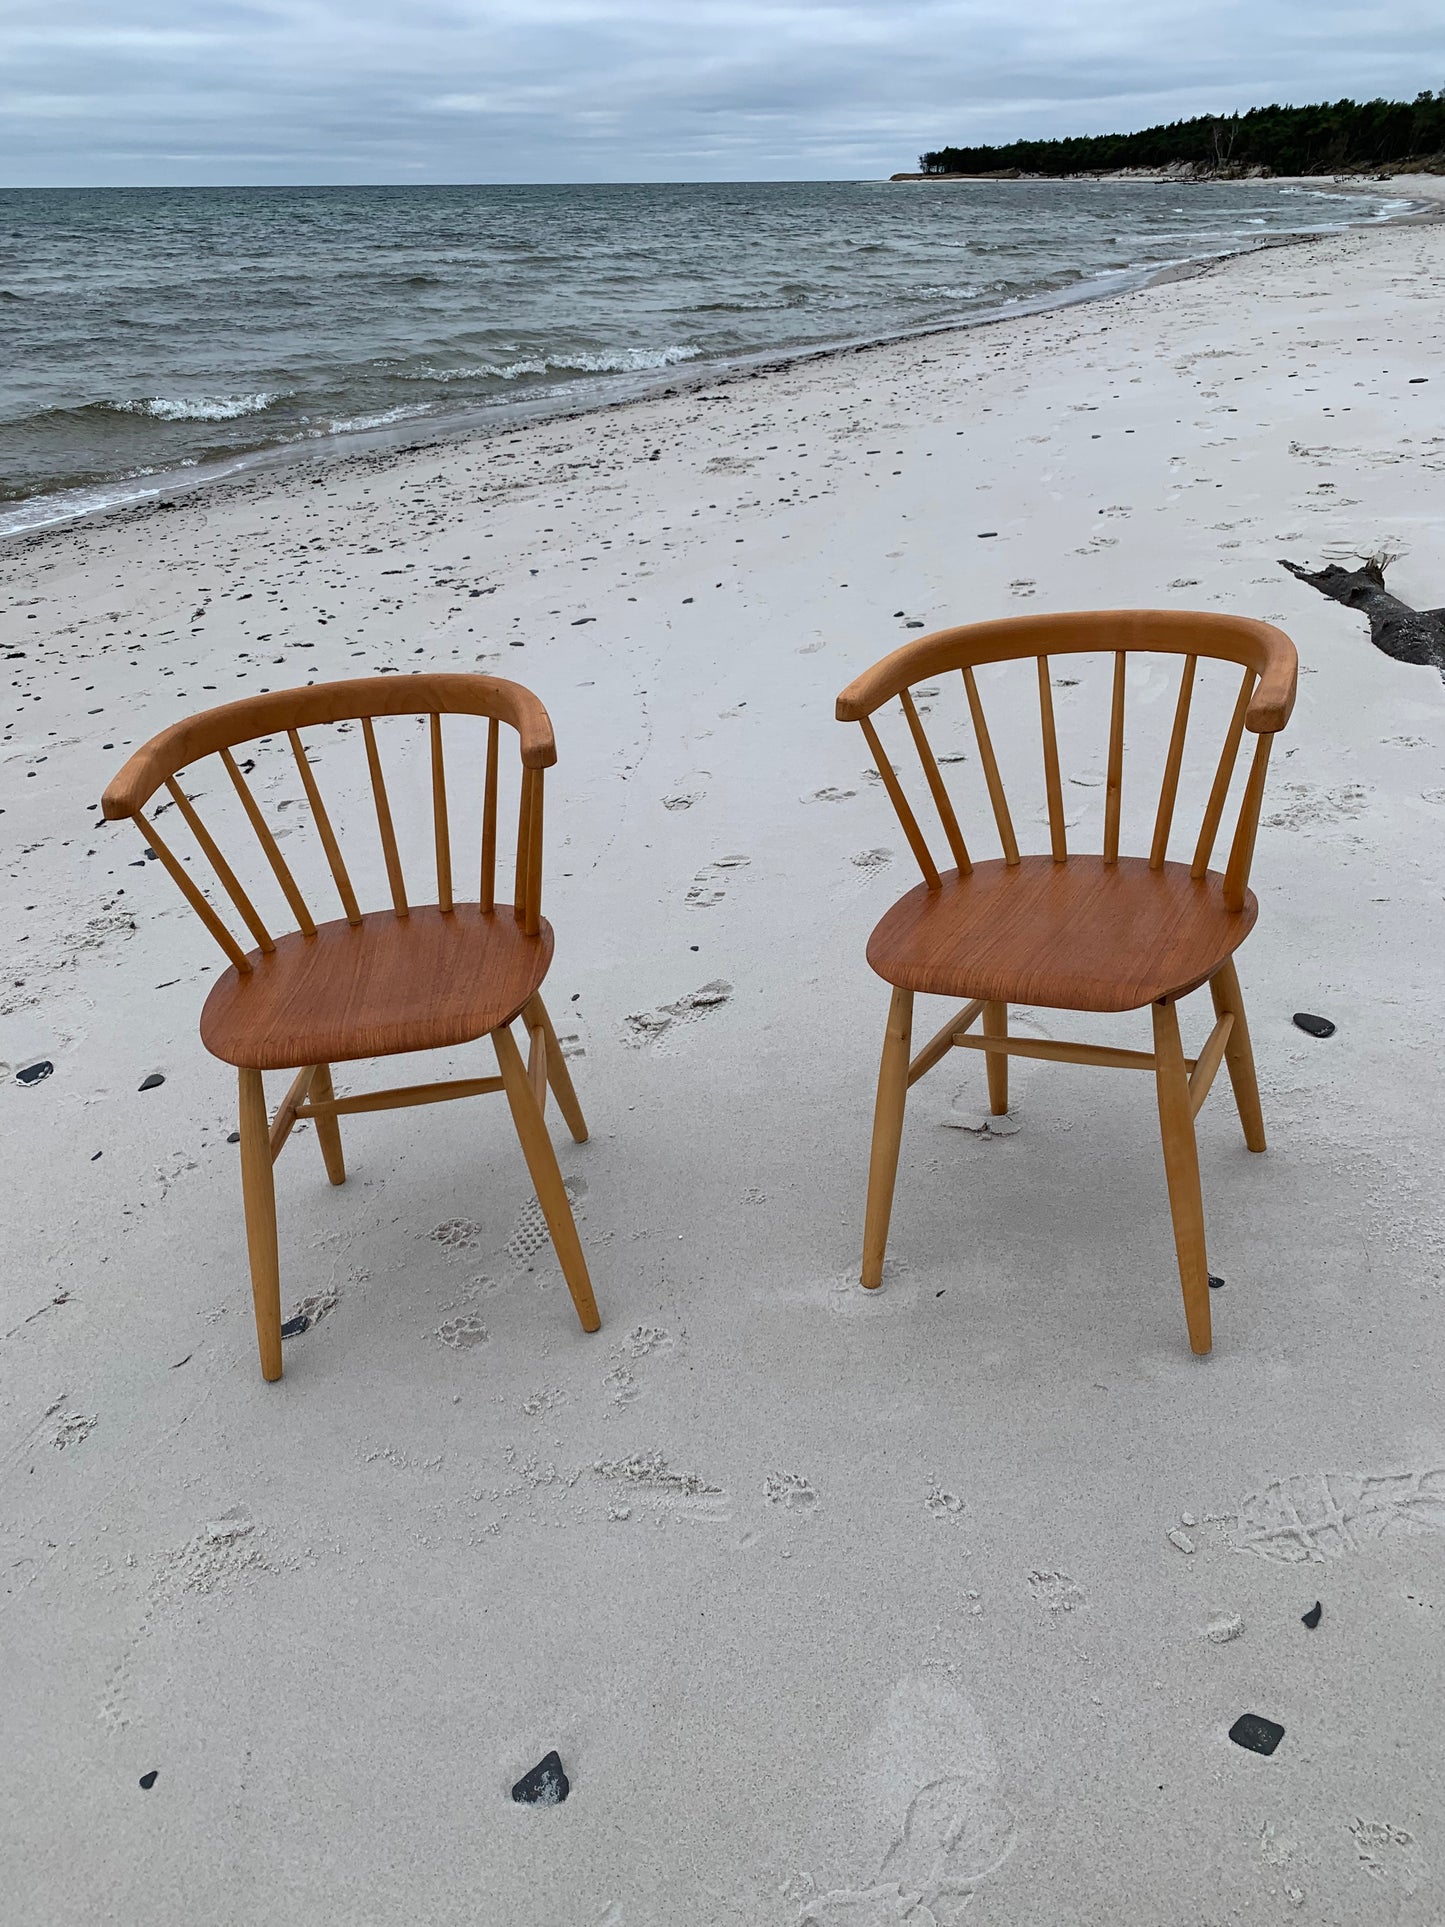 Kinderstühle (zwei Stühle)